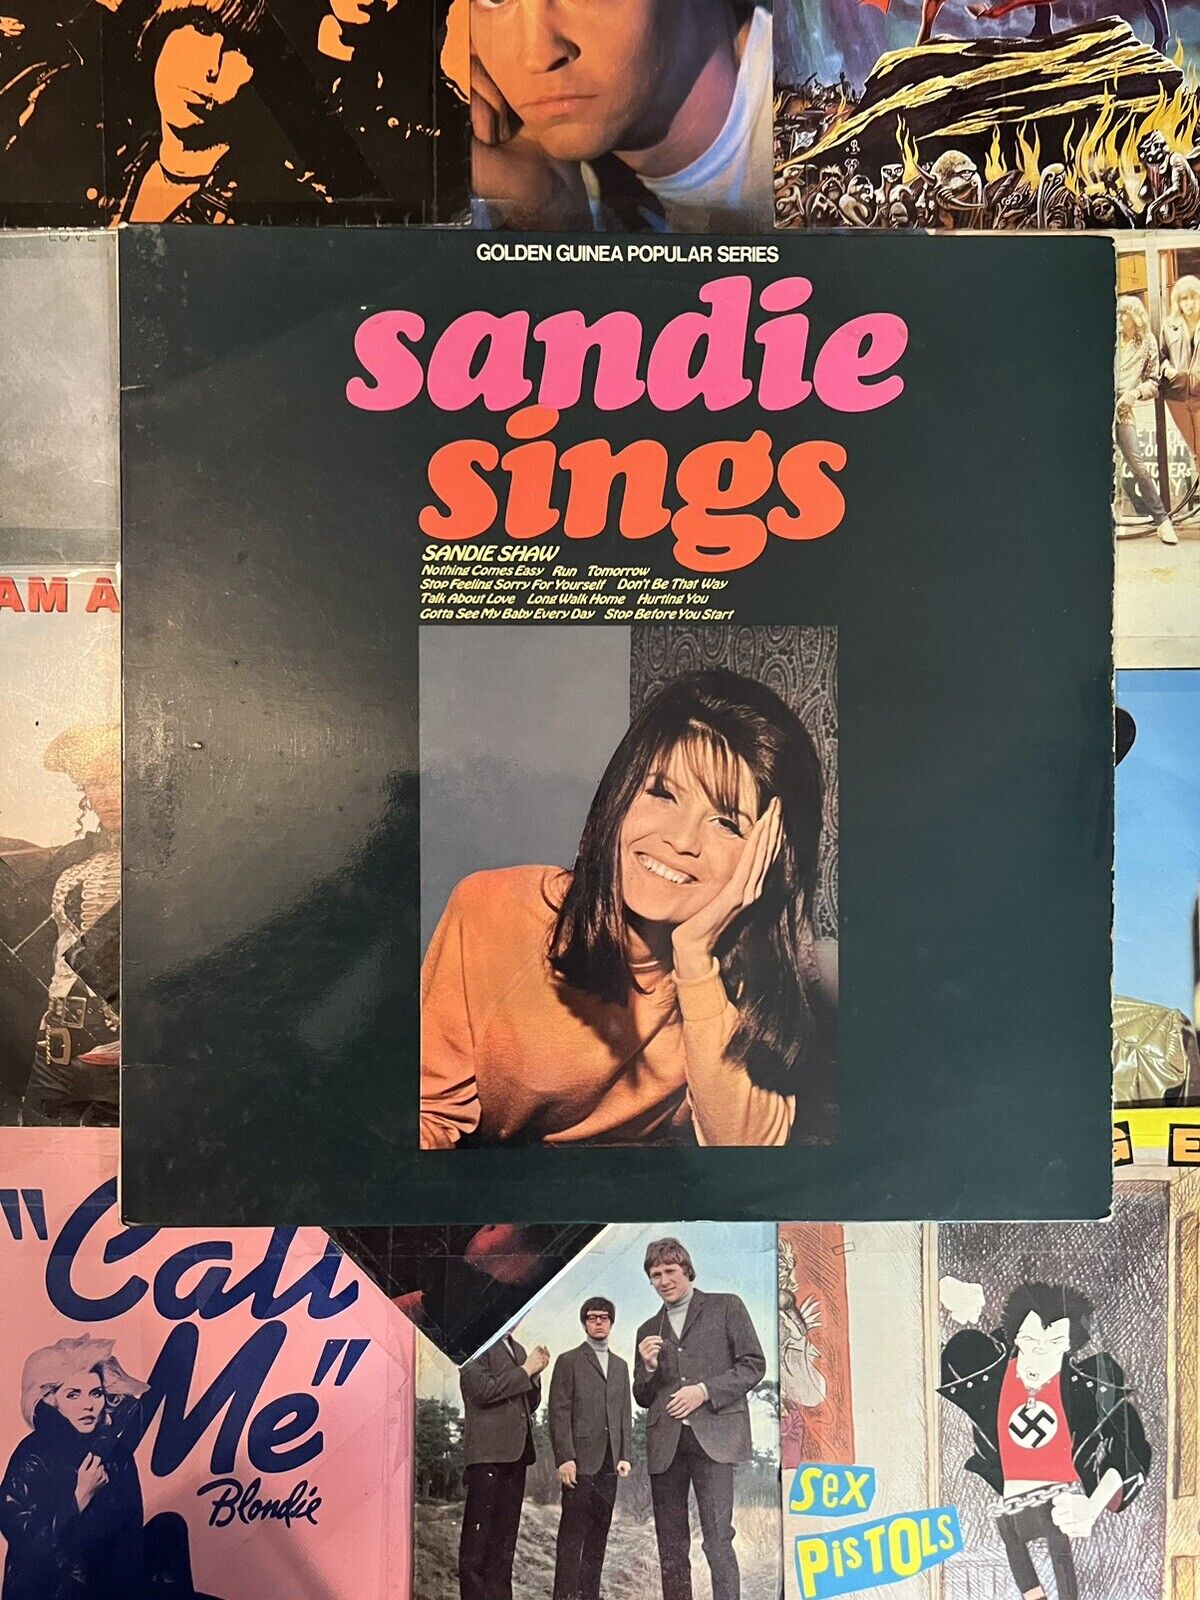 SAMDIE SHAW - SANDIE SINGS - ORIGINAL GOLDEN GUINEA LP - RECORD VINYL ALBUM